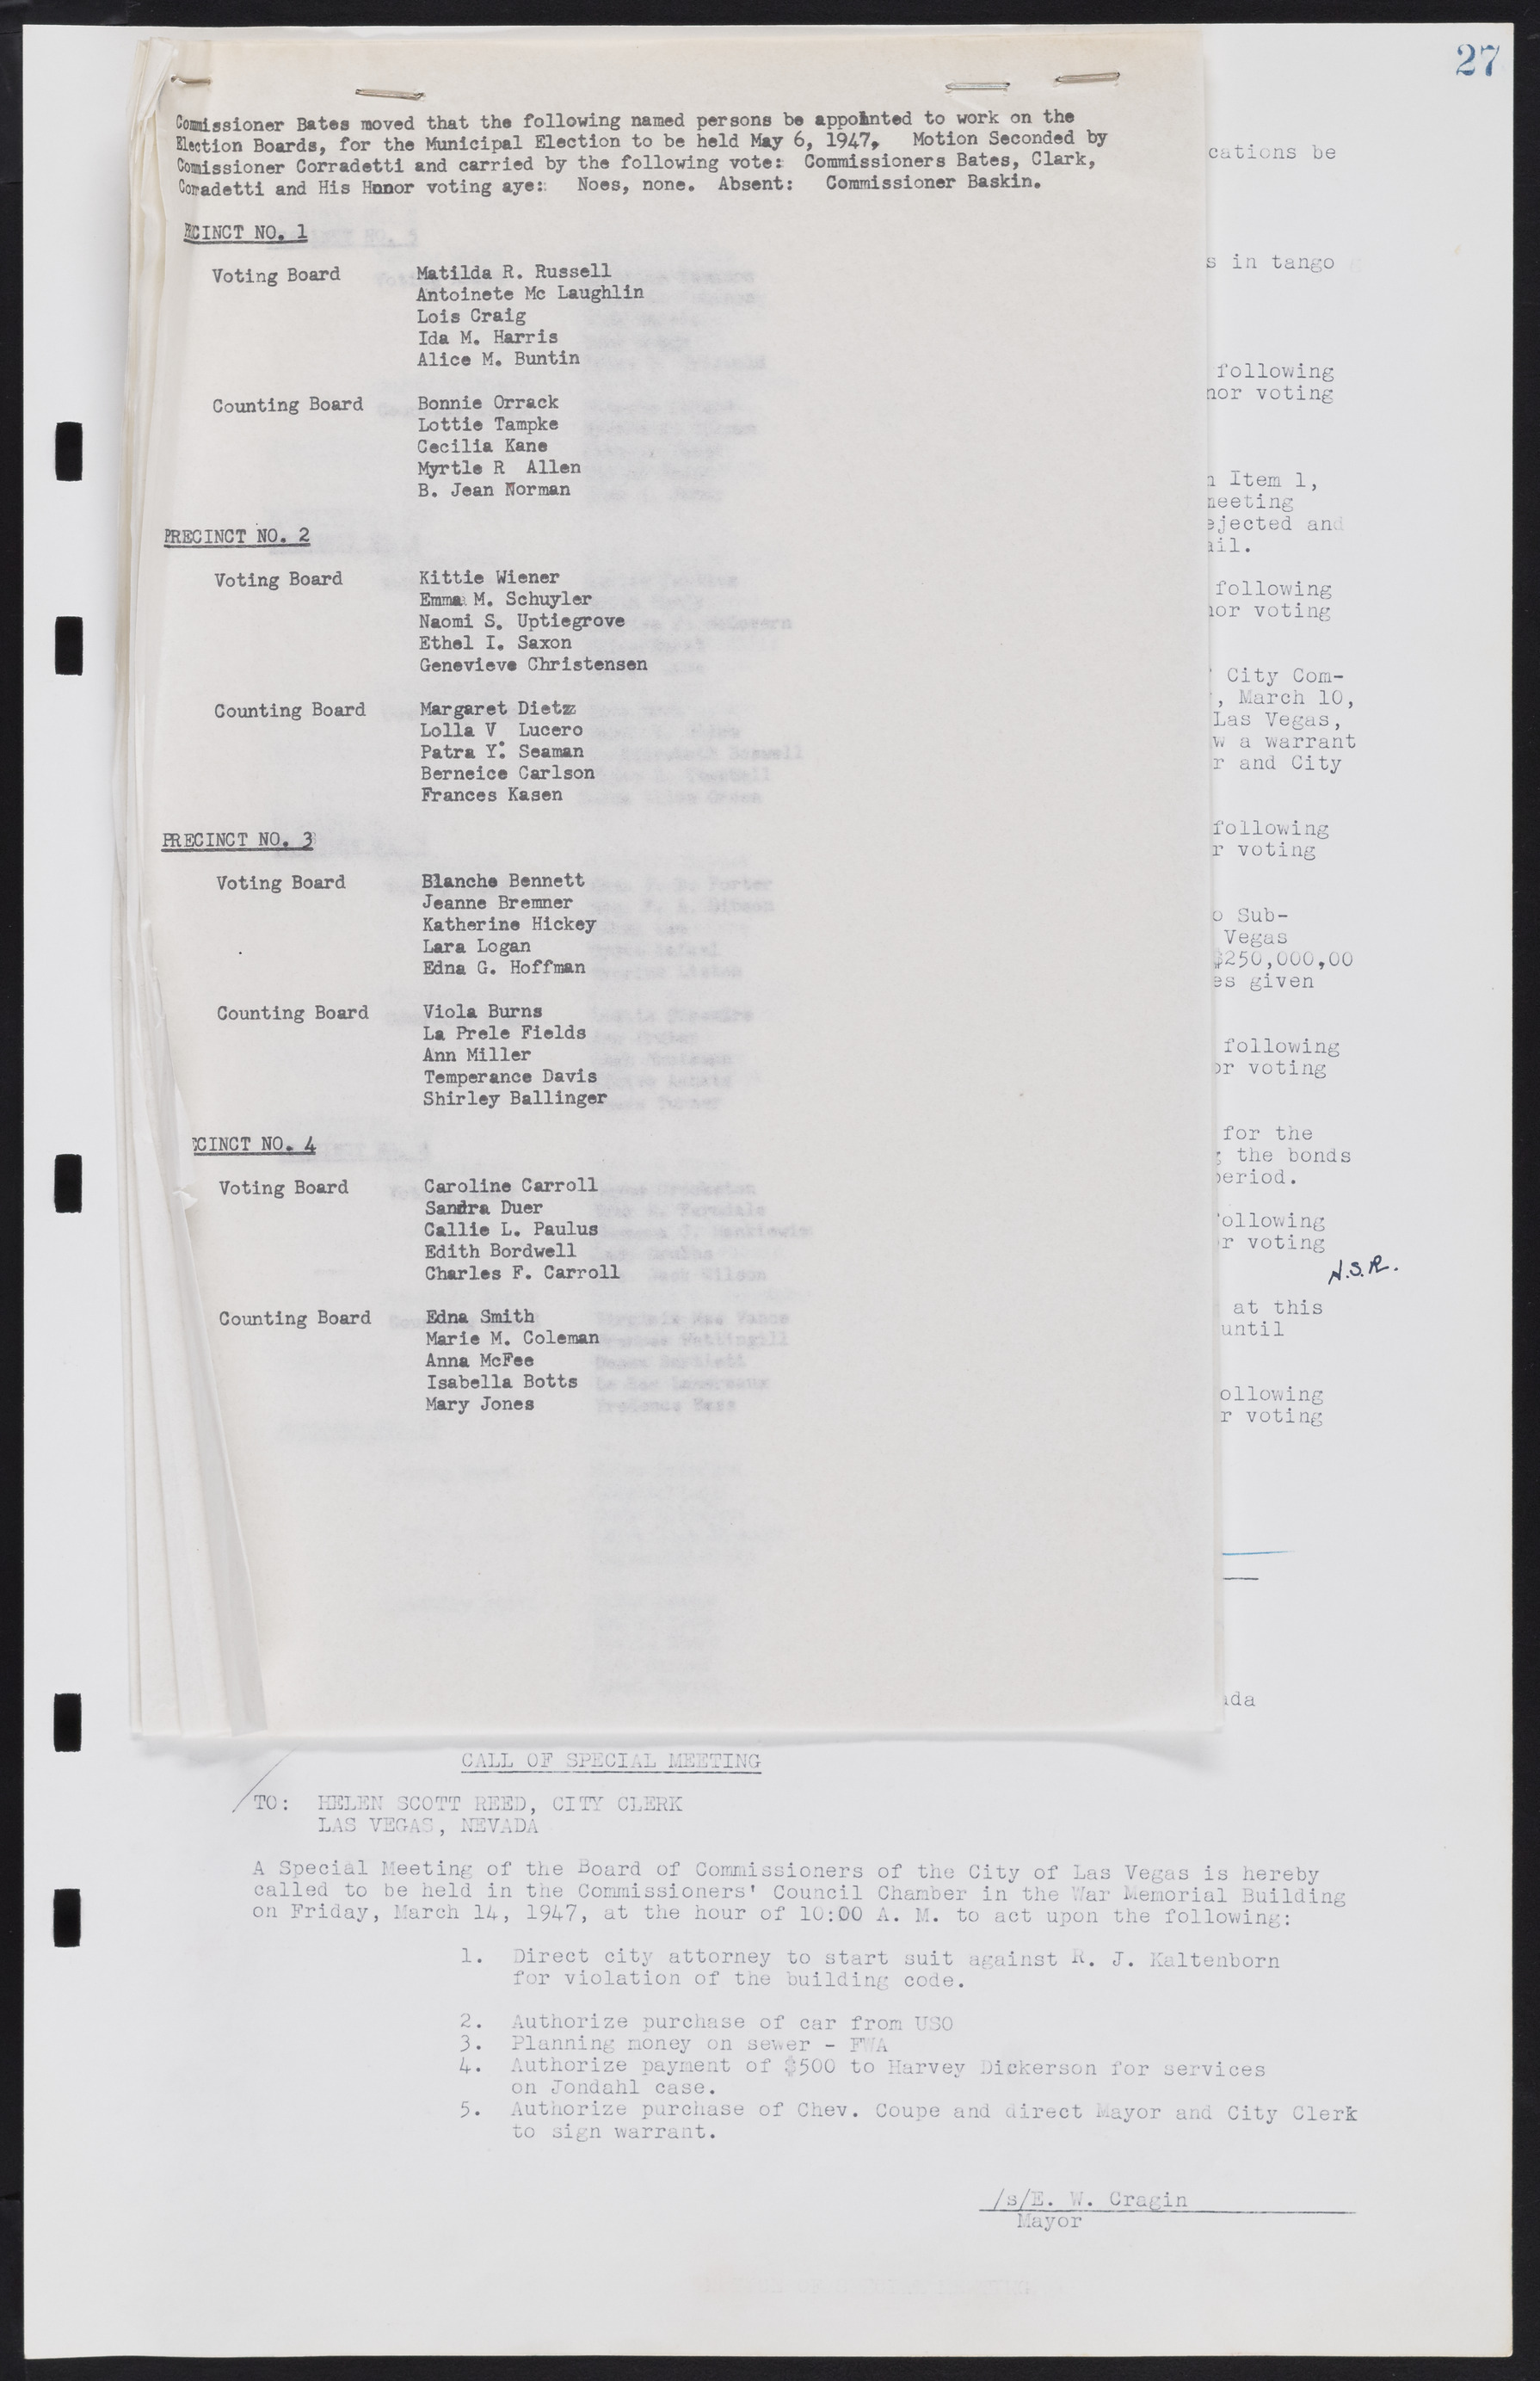 Las Vegas City Commission Minutes, January 7, 1947 to October 26, 1949, lvc000006-35